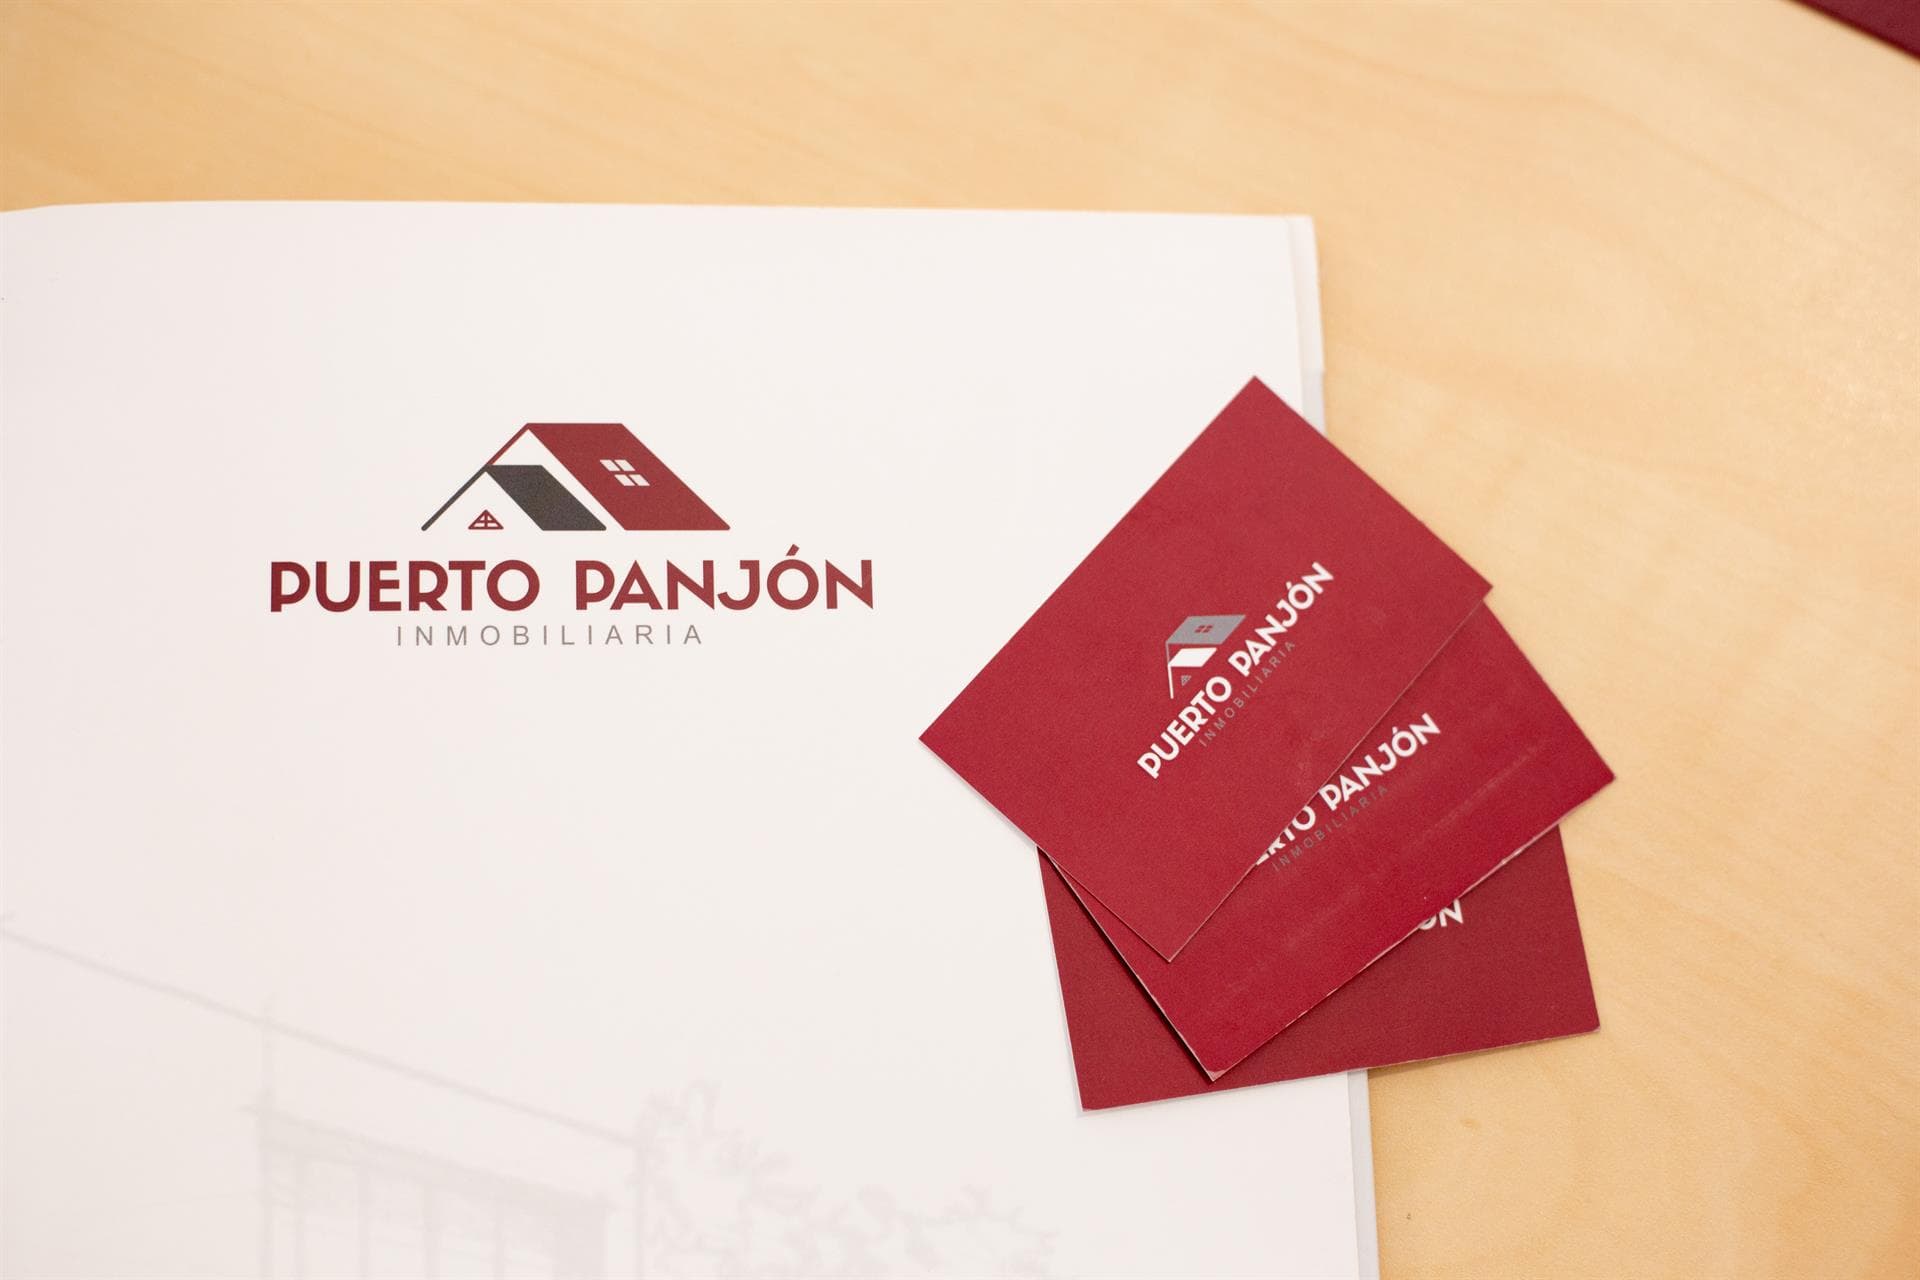 Puerto Panjón Inmobiliaria